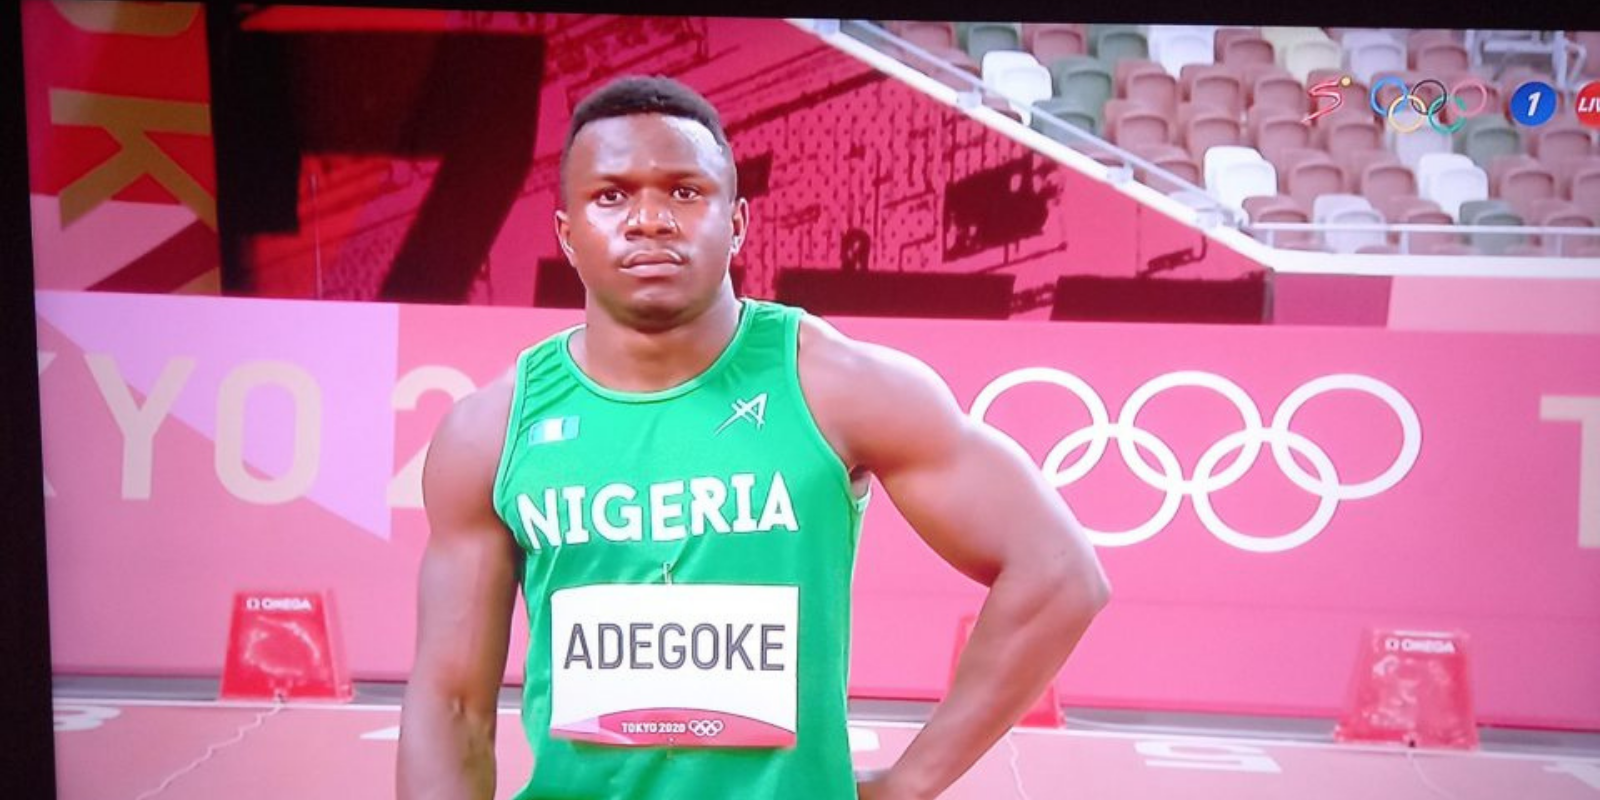 What sport does Enoch Adegoke participate in?